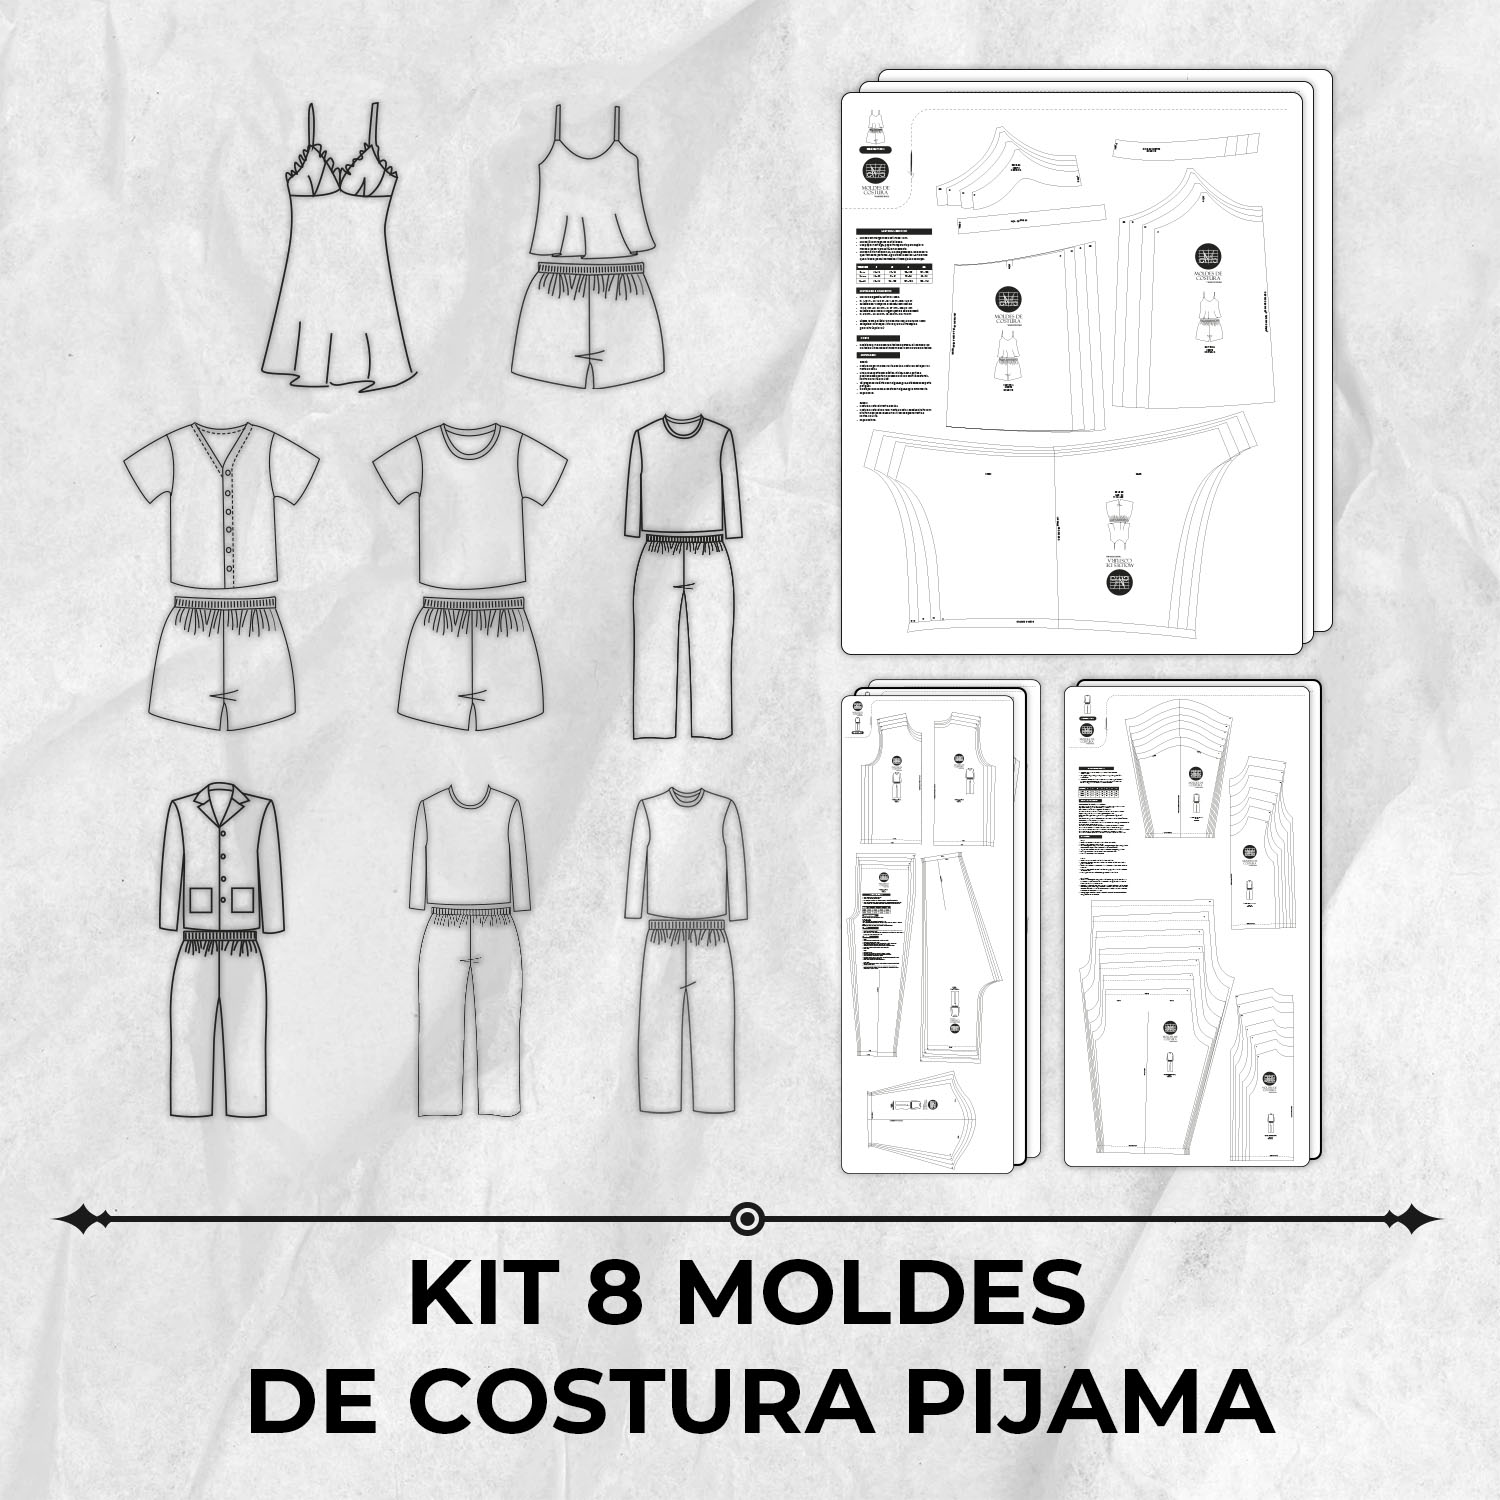 Kit 8 moldes de costura pijama By Marlene Mukai